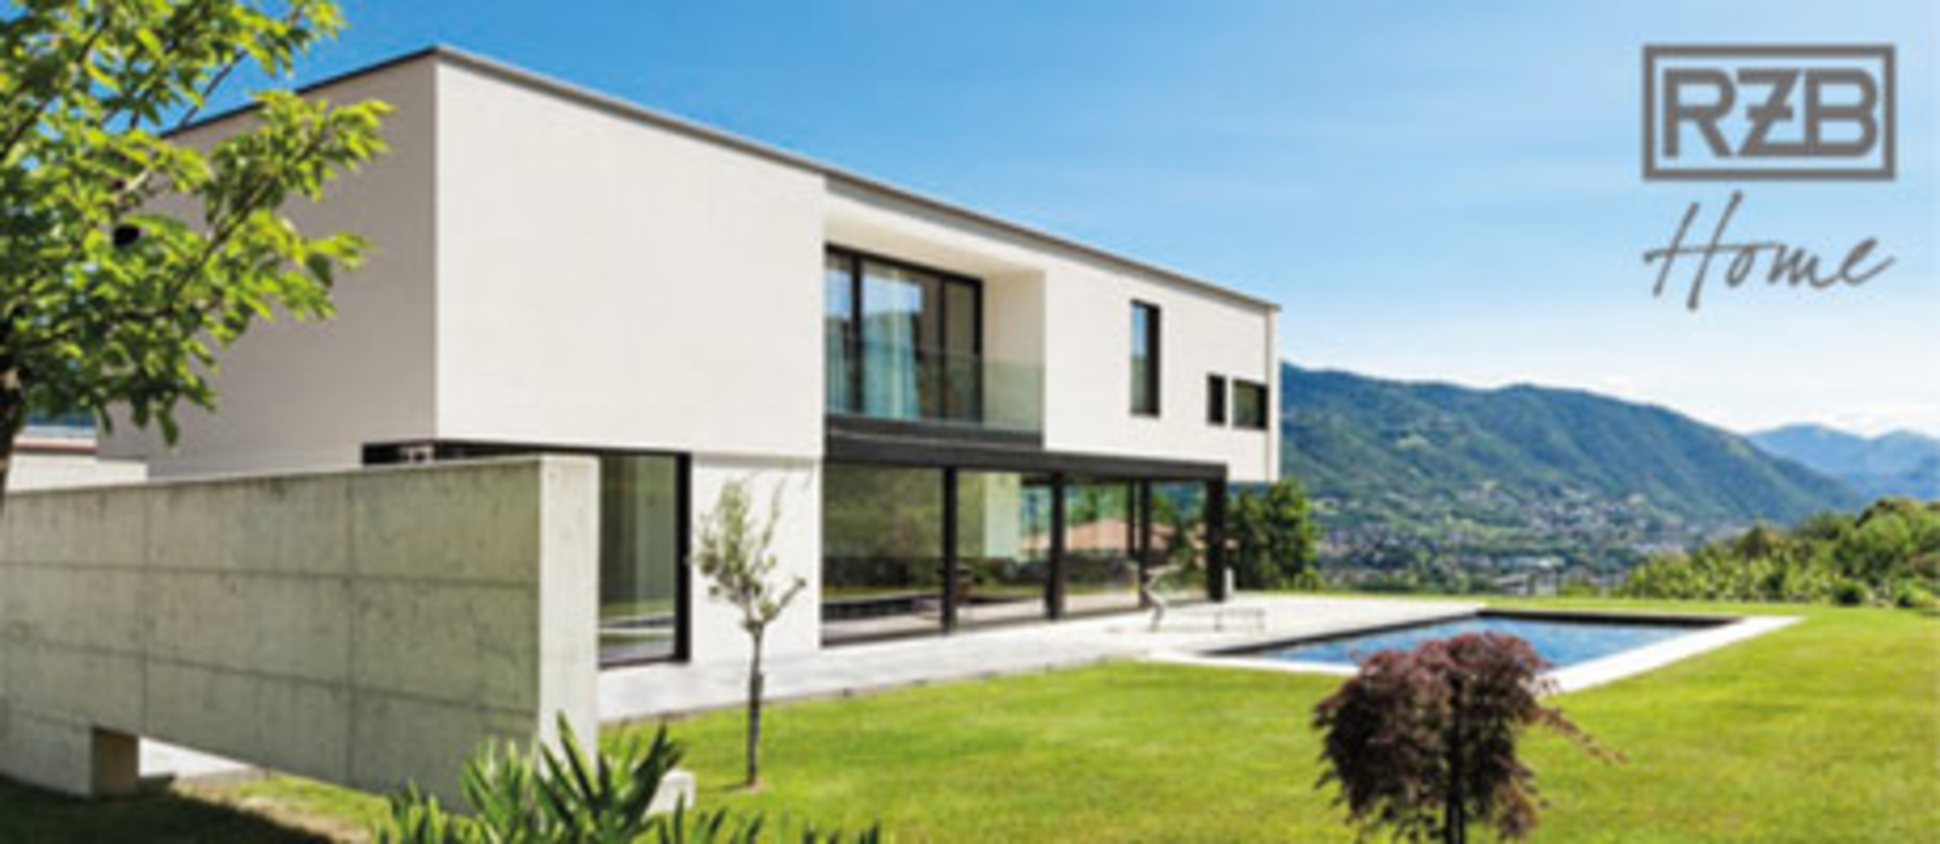 RZB Home + Basic bei amnis GmbH in Heilsbronn